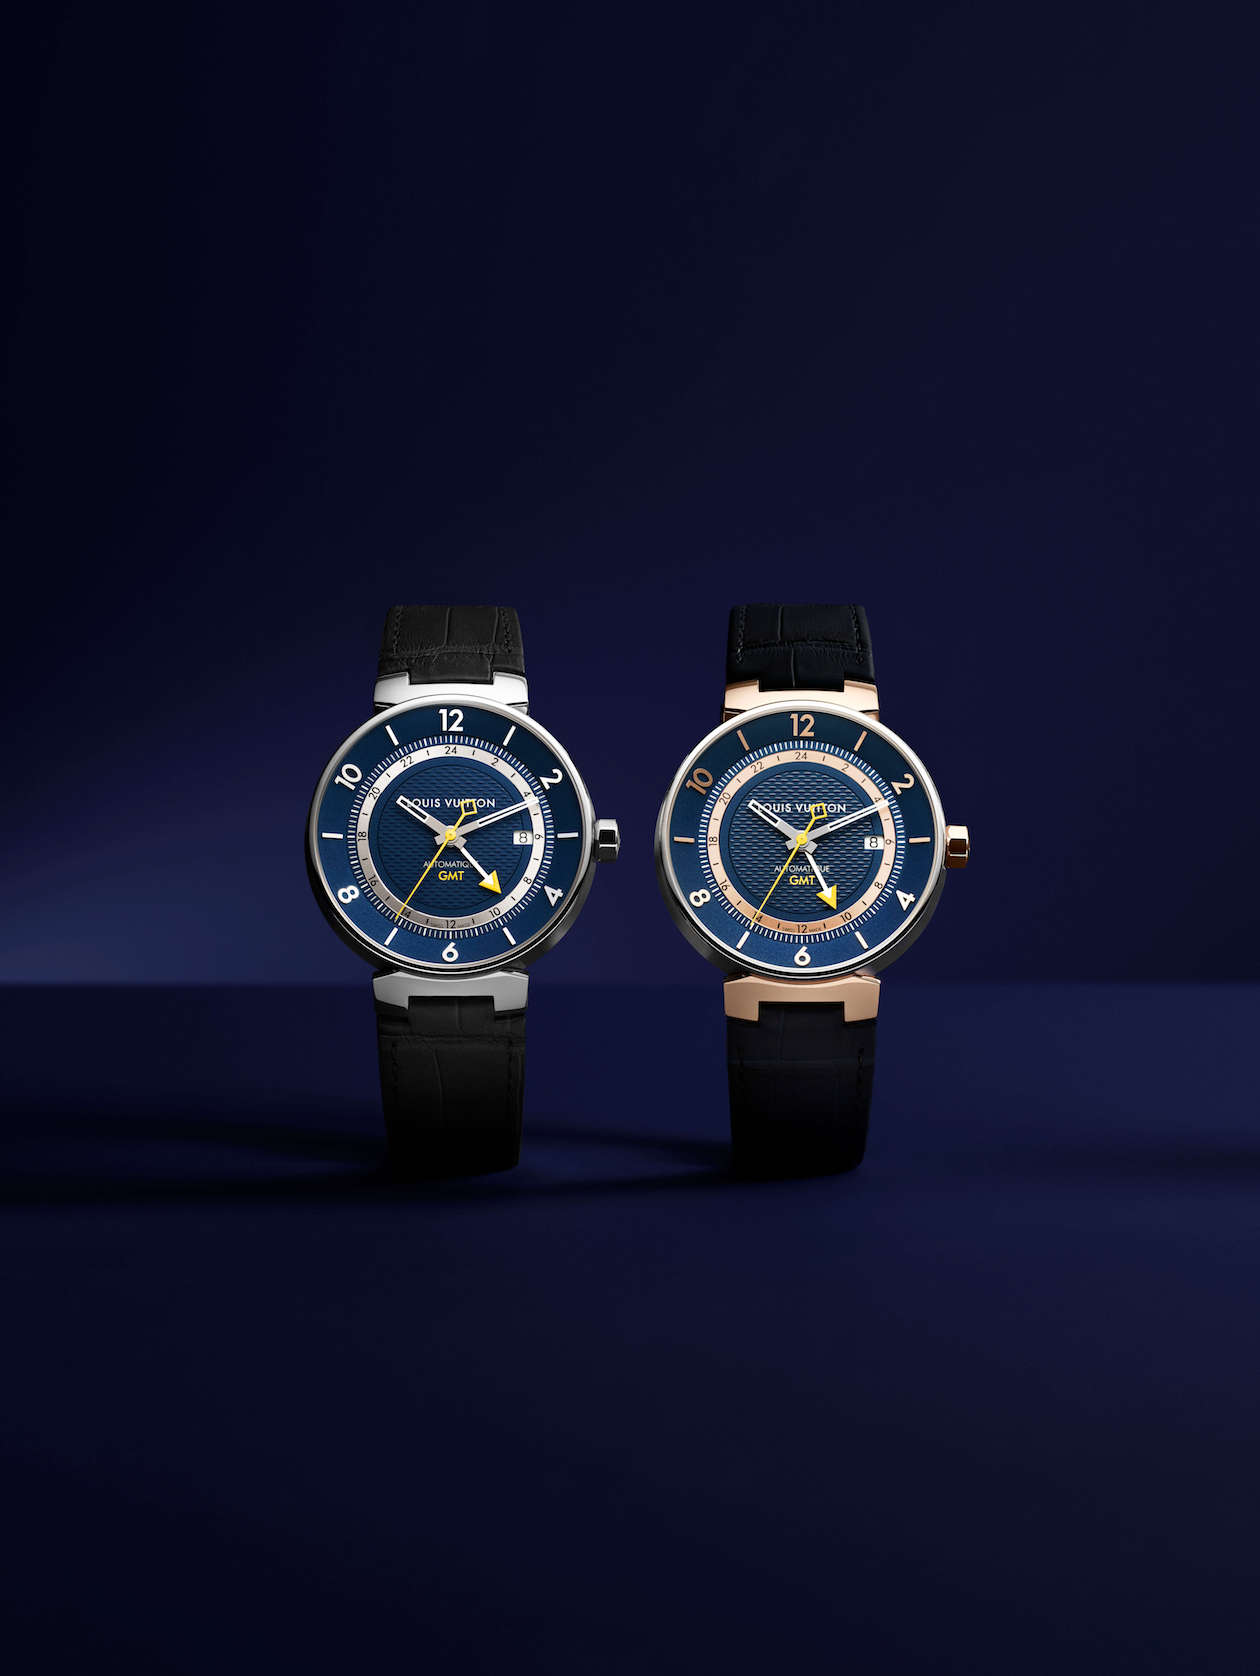 Tambour Moon GMT Black watch, Louis Vuitton